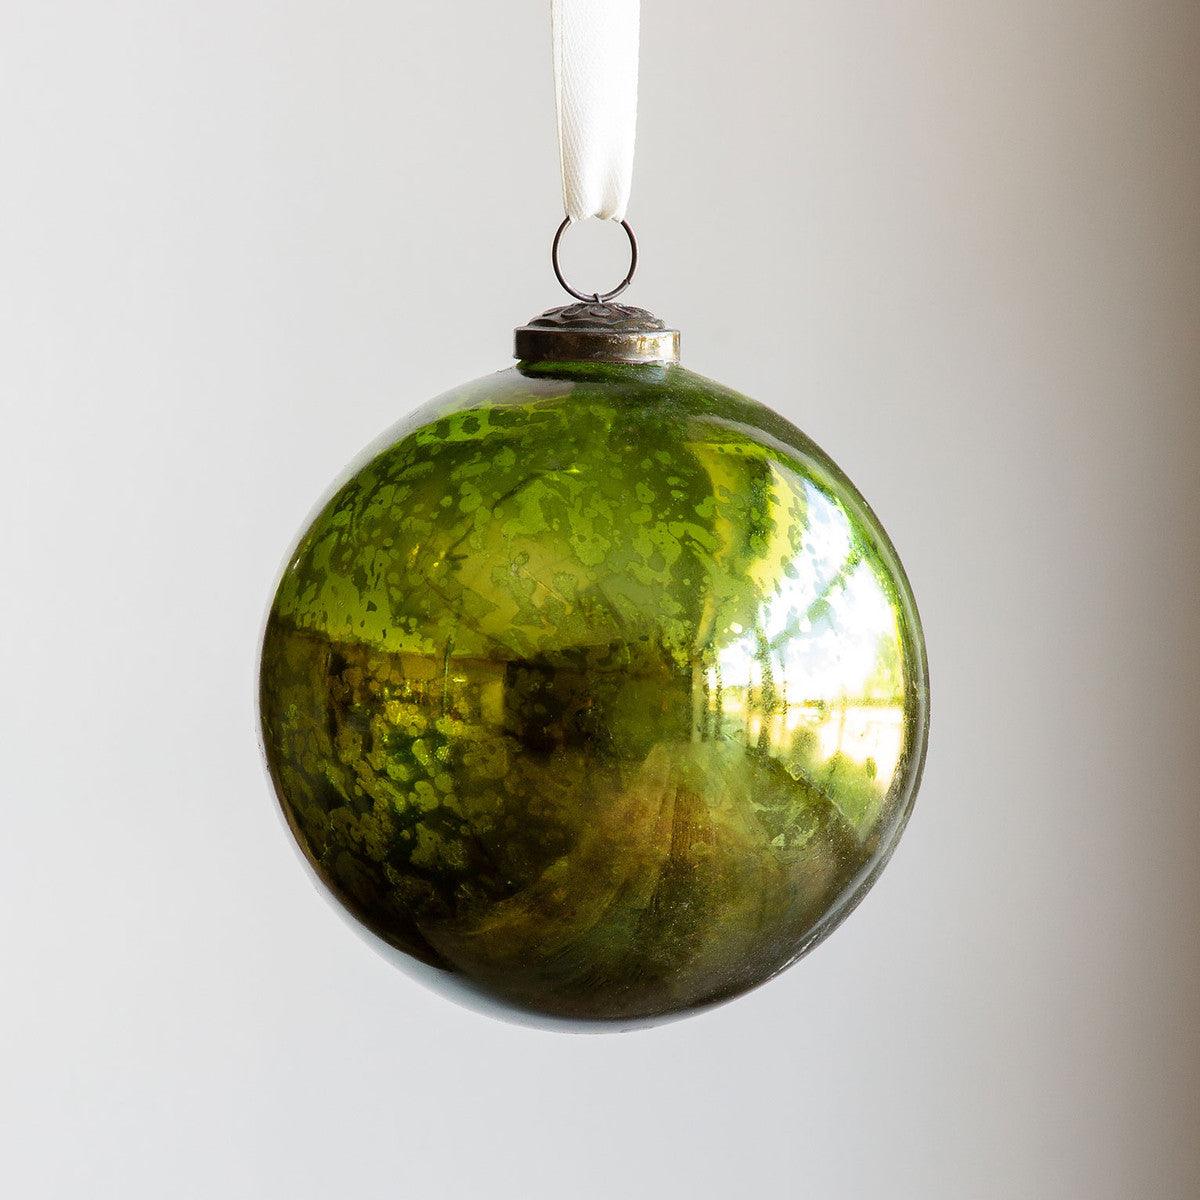 Antique Mercury Glass Ball Ornament, Citrus Green, Large - Signastyle Boutique